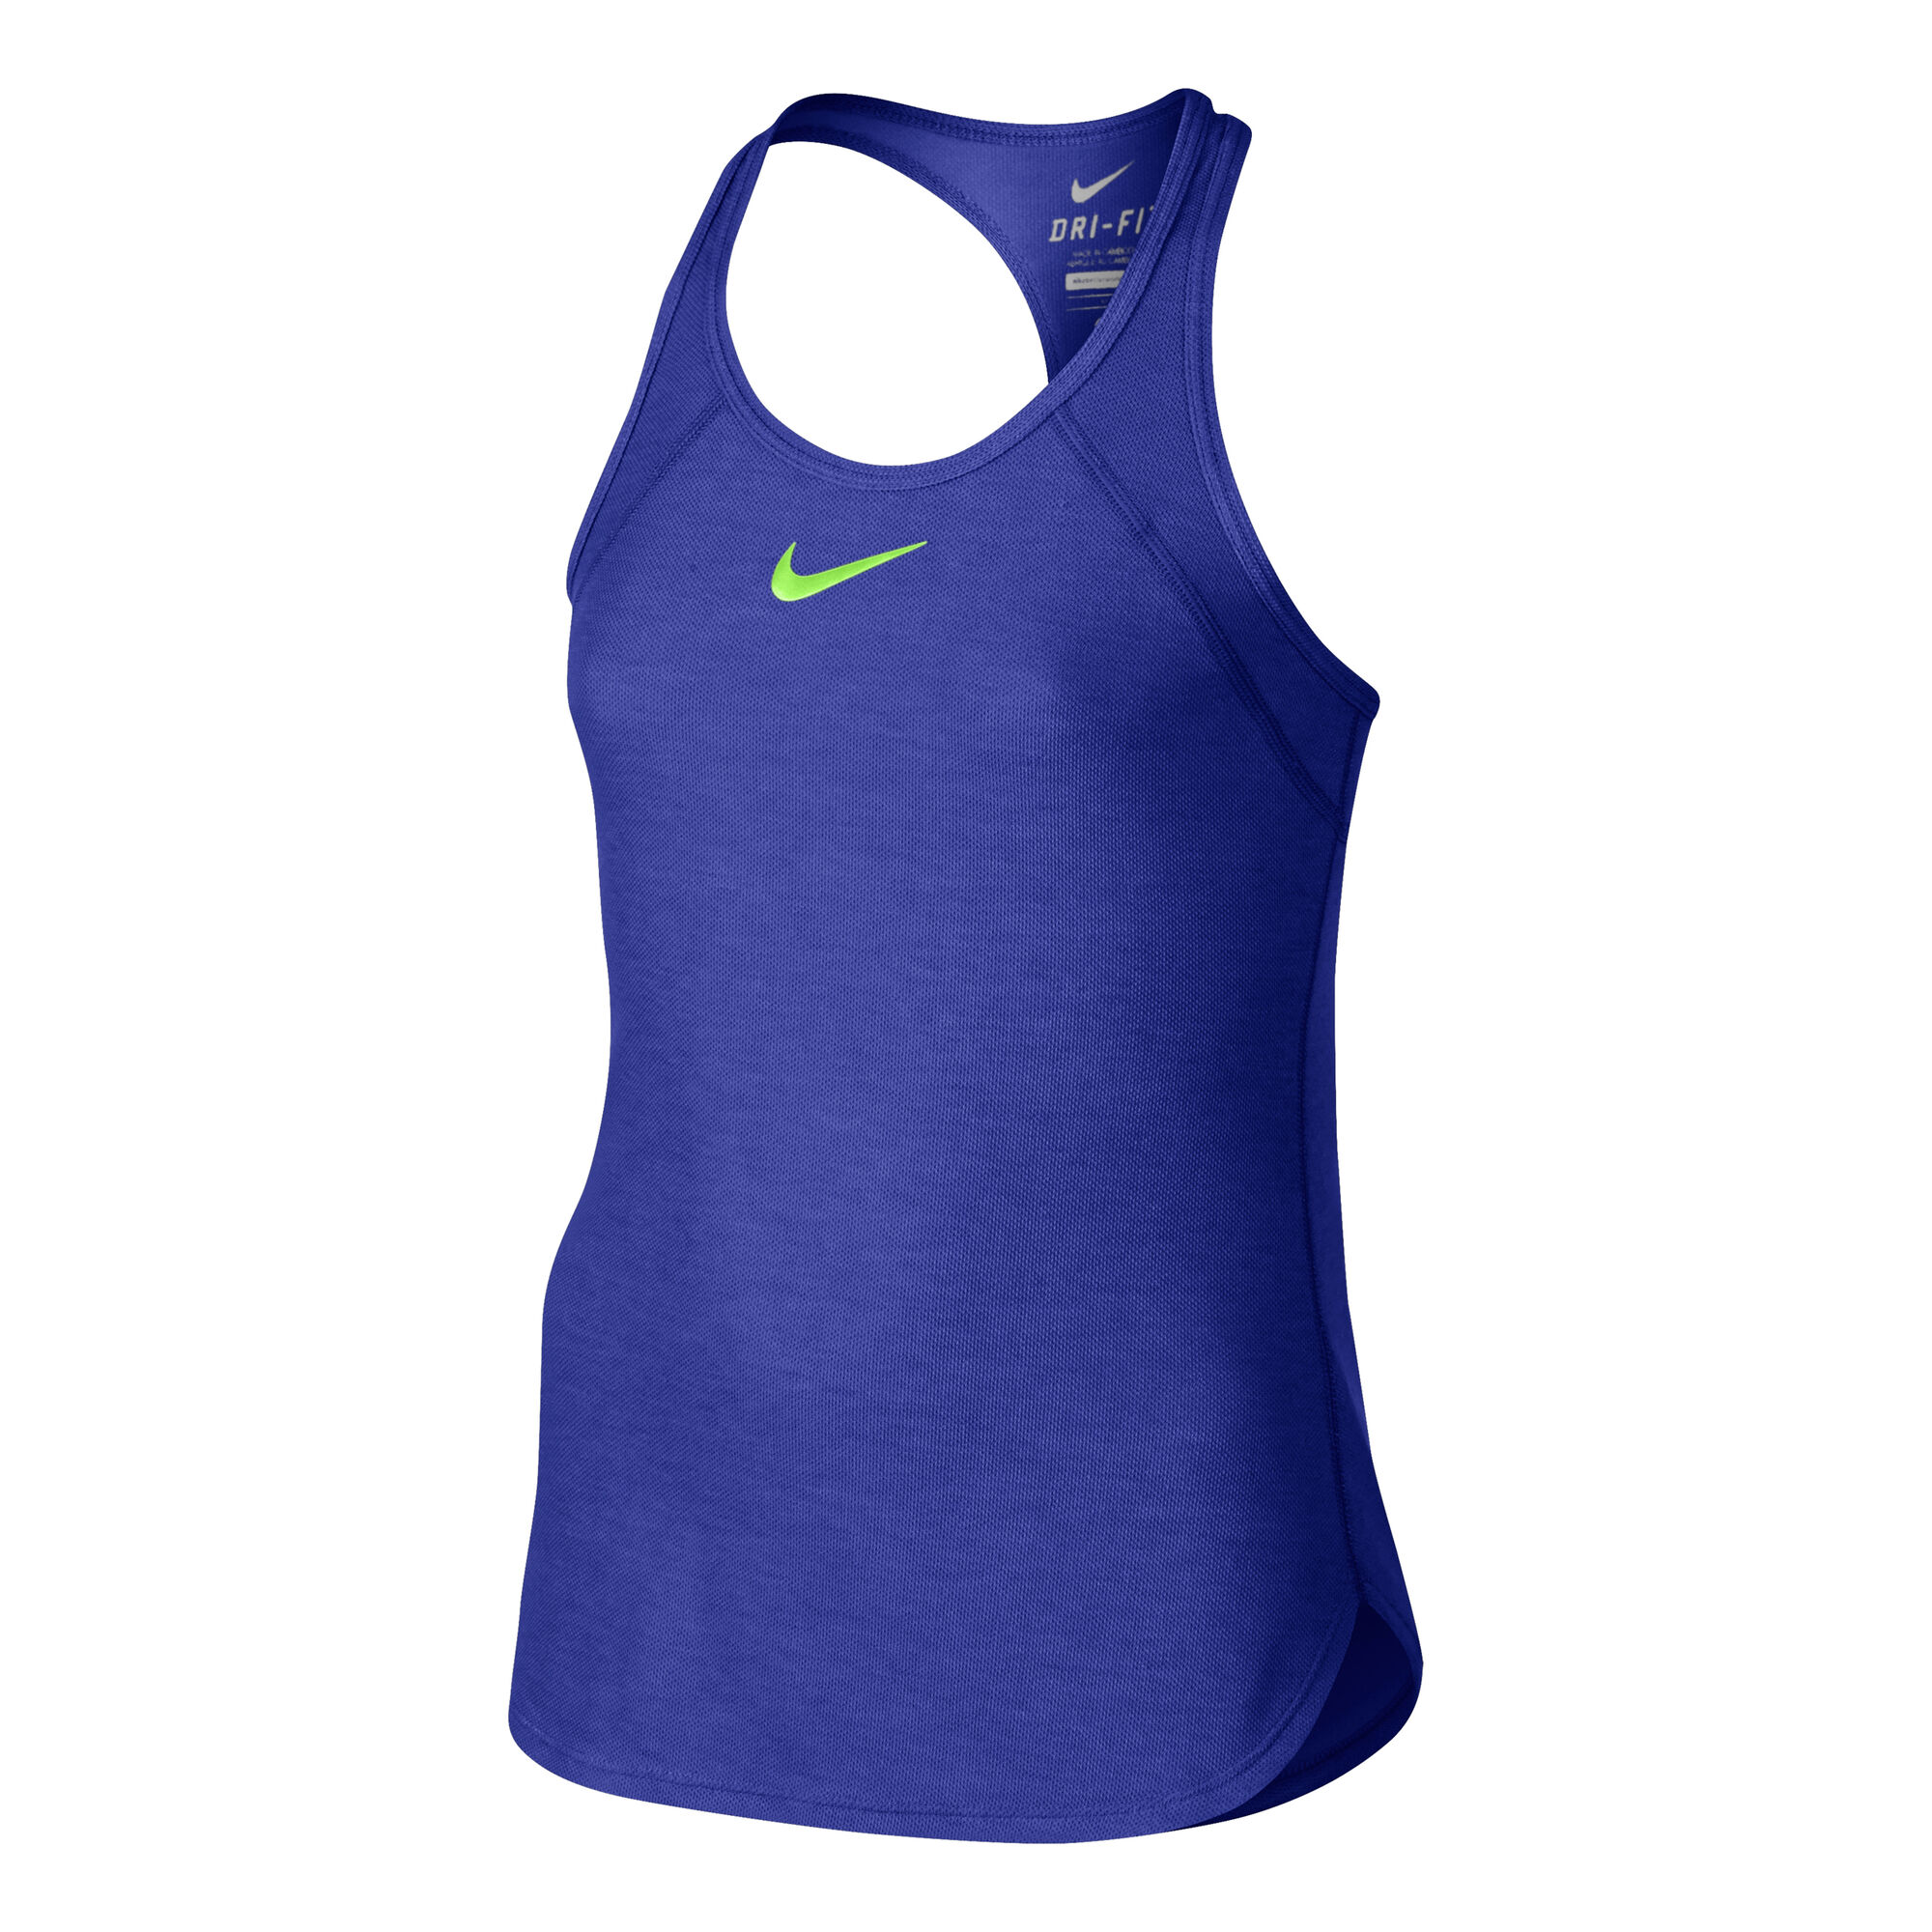 buy Nike Slam Tank Top Girls - Blue, Light Green online | Tennis-Point